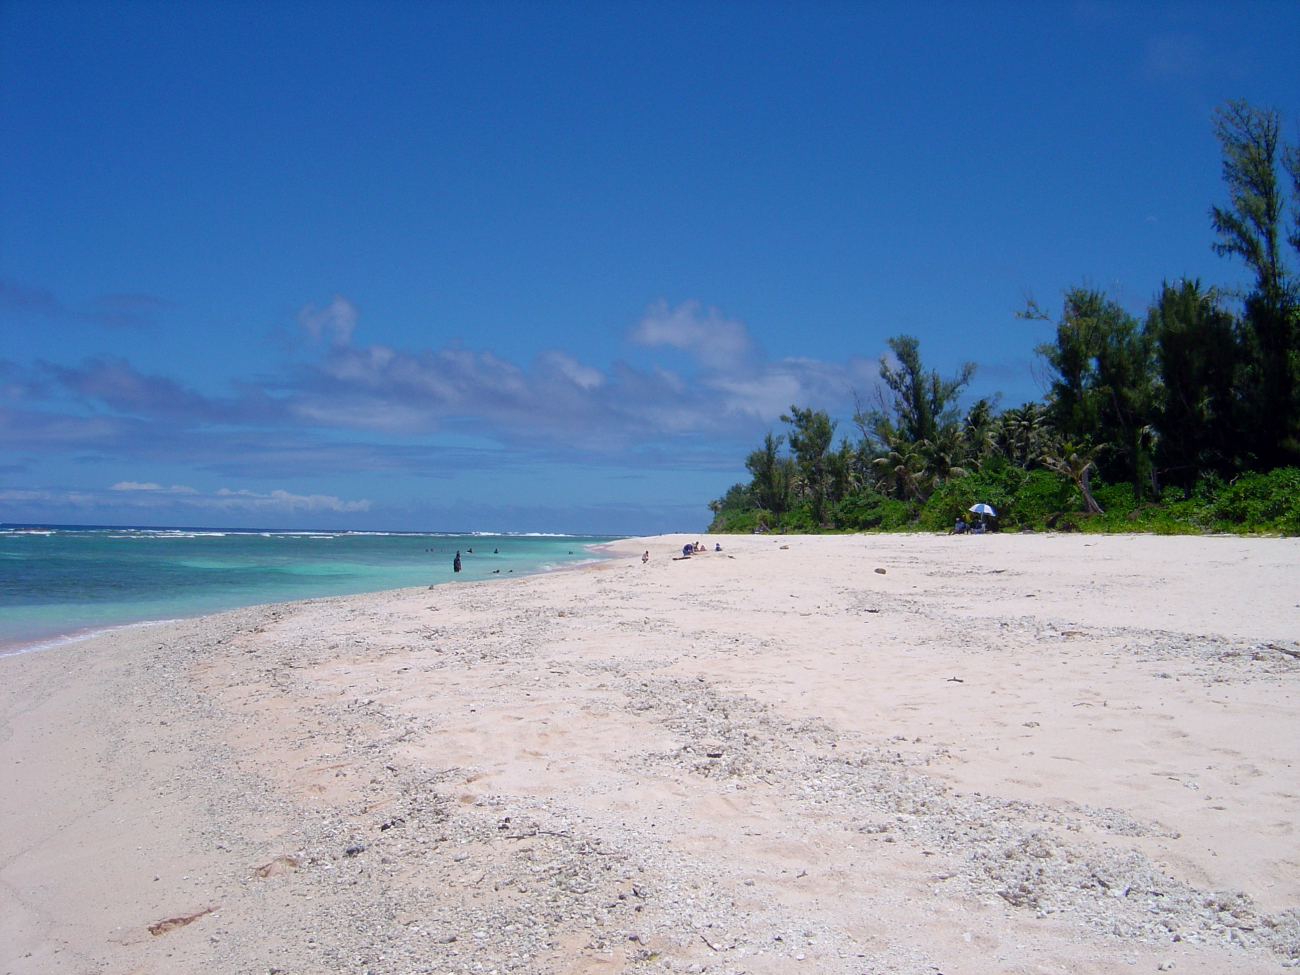 A magnificent white sand beach on Guam